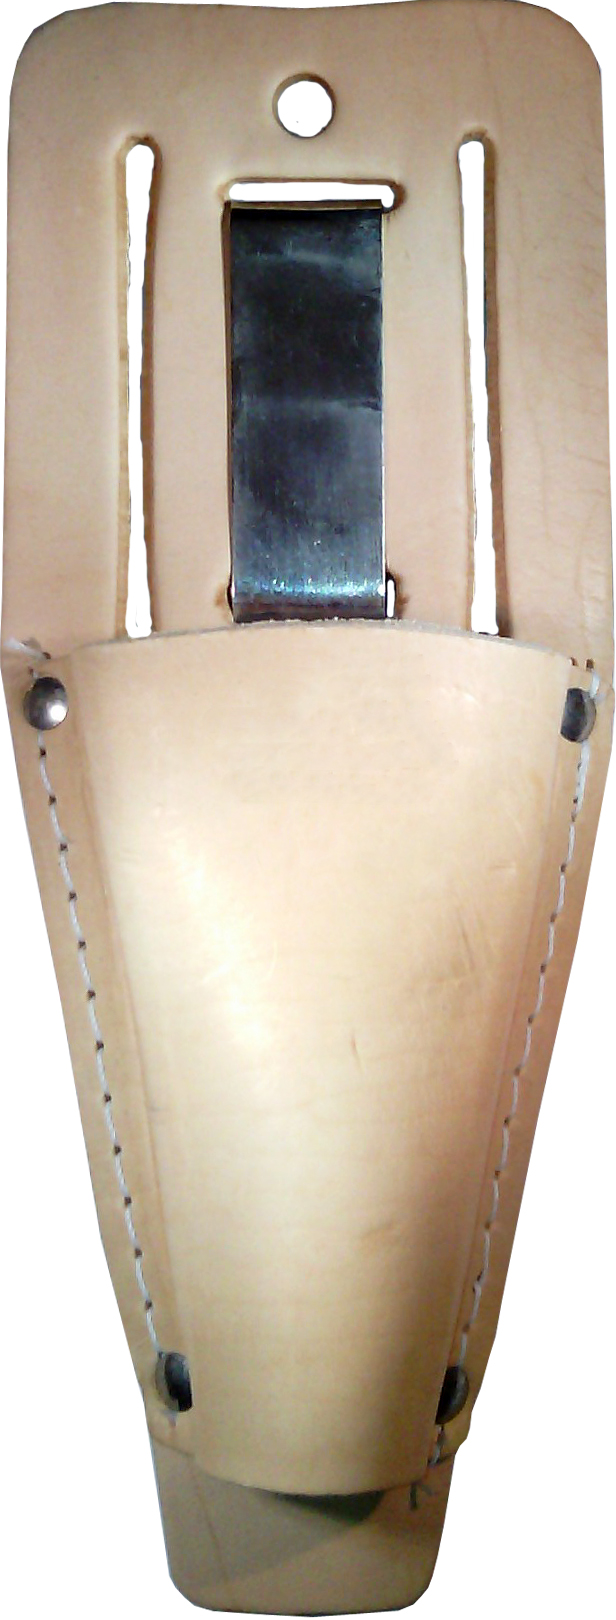 Zenport Holster HJ262 Leather Pruner Sheath W/Belt Loop And Metal Clip For Pruners / Folding Saws